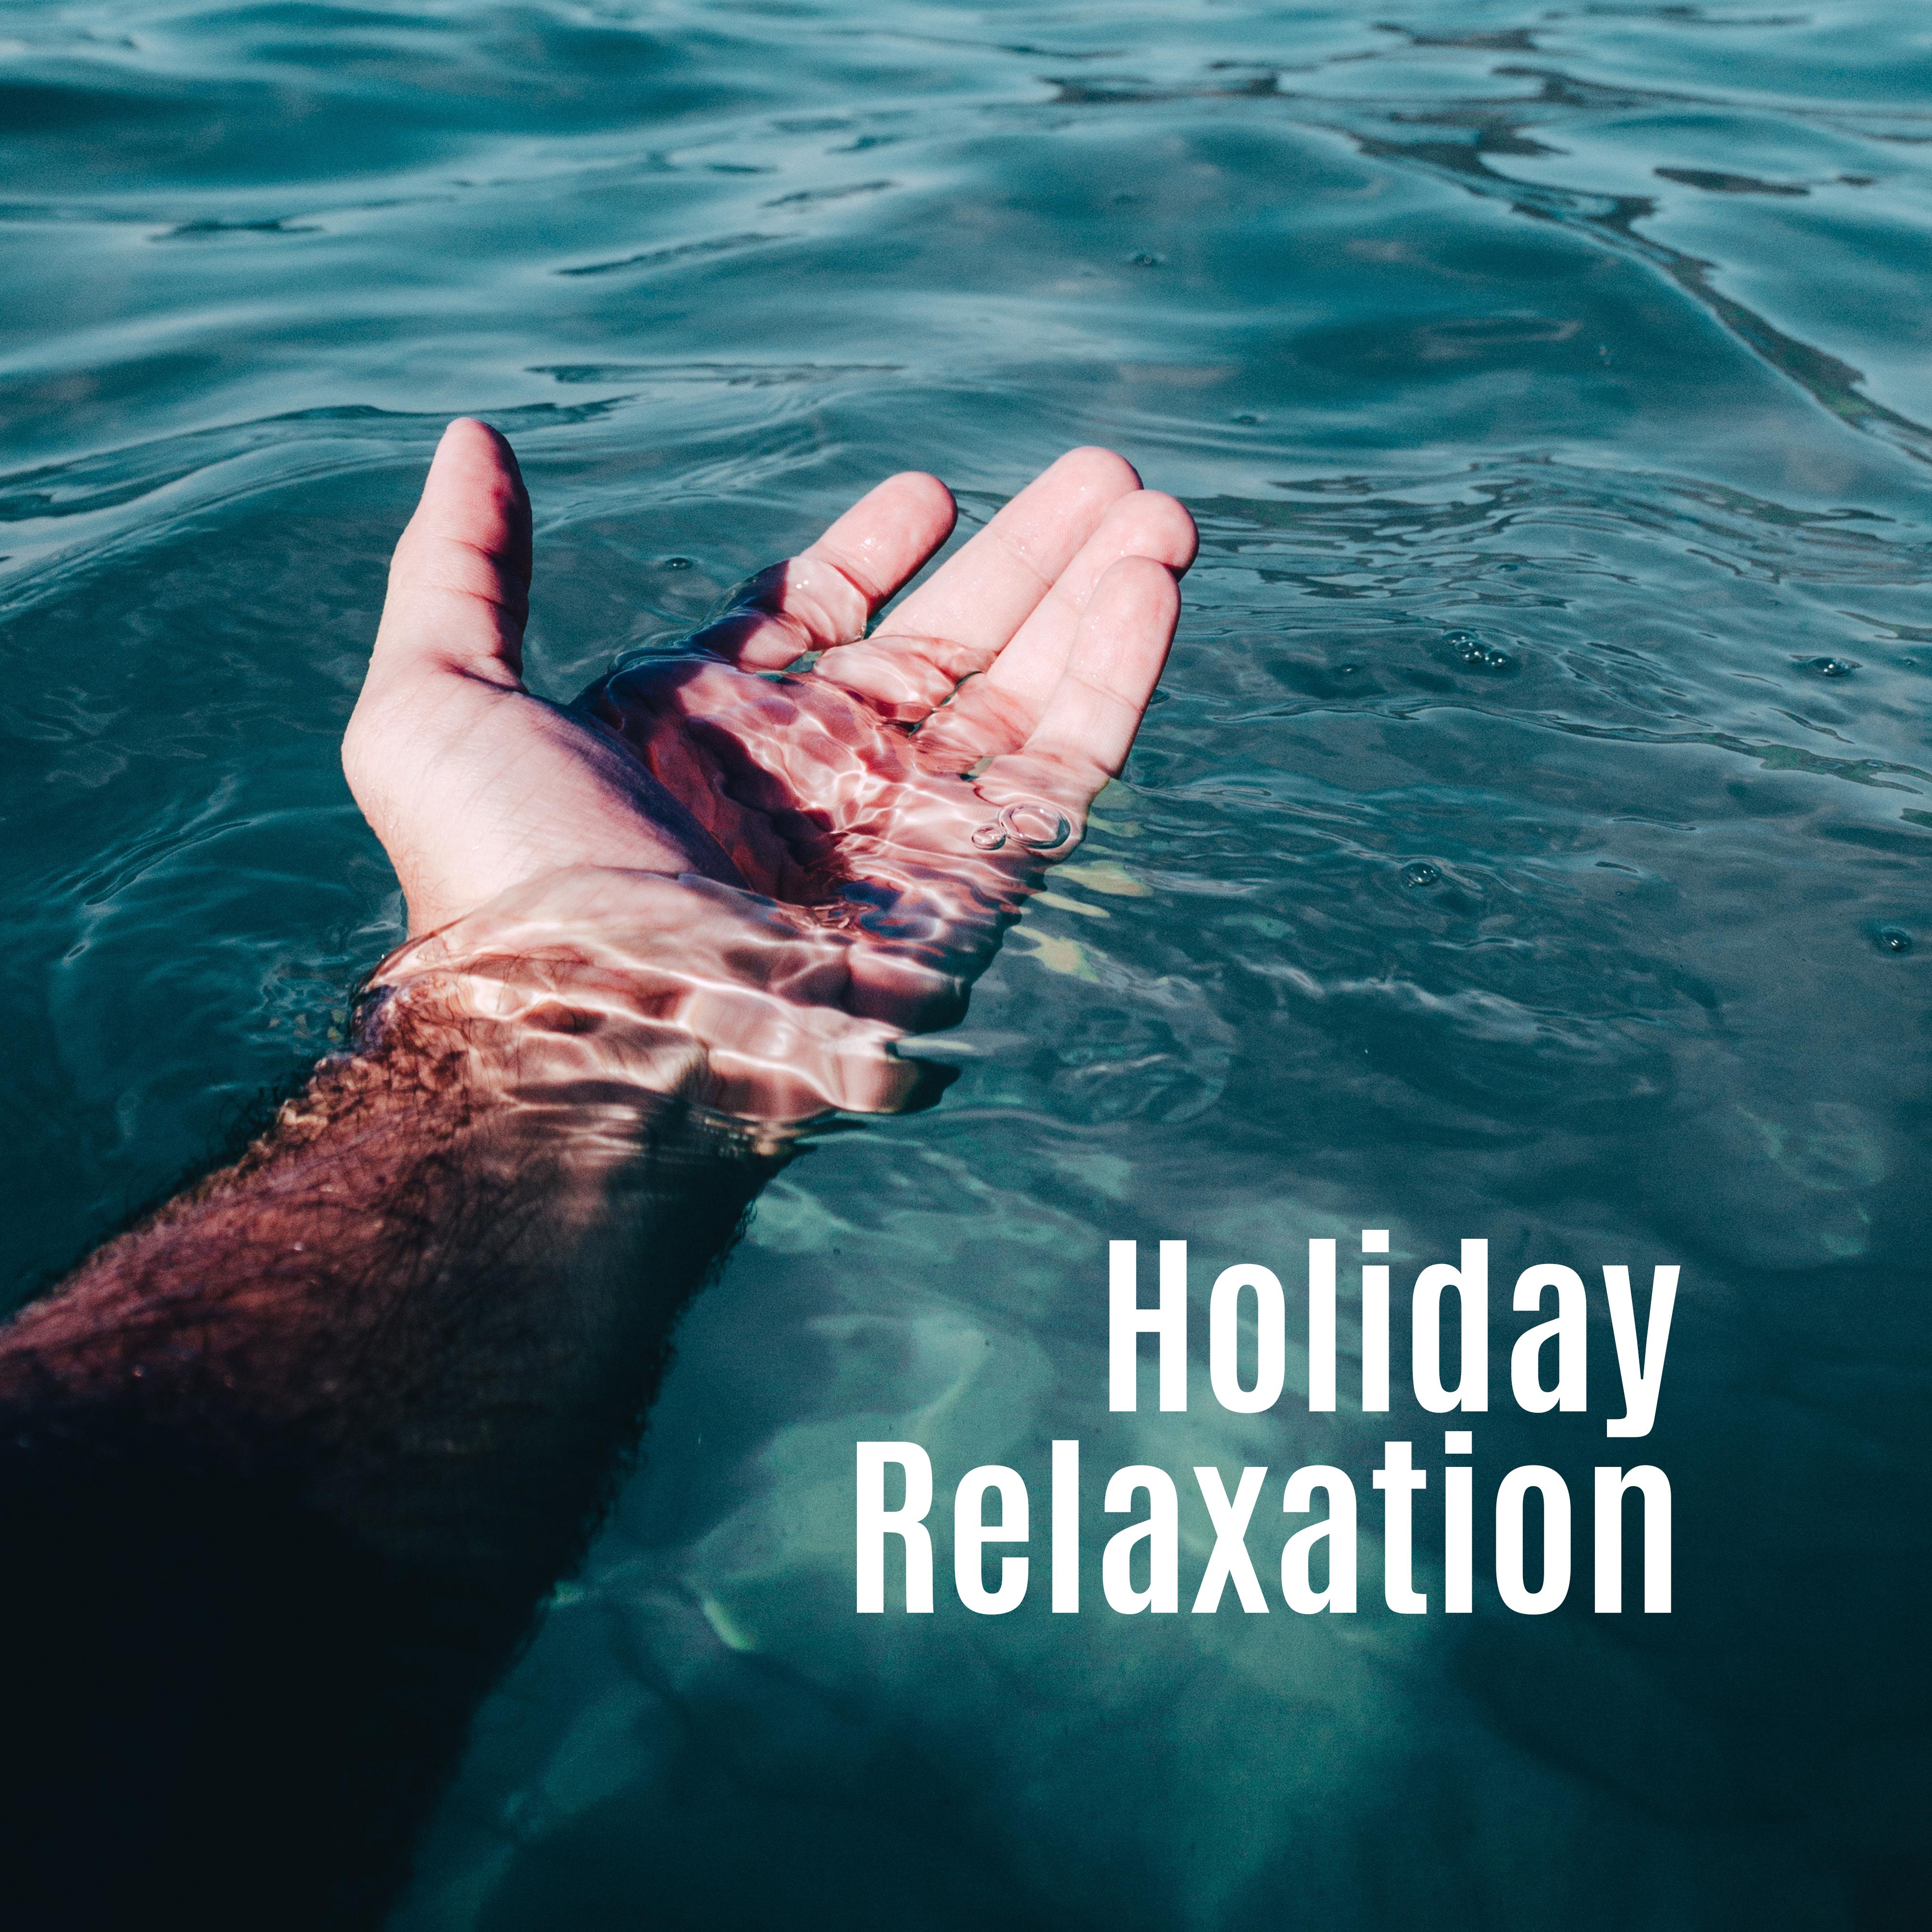 Holiday Relaxation: Ibiza Chillout, Zen, *** Music Zone, Beach Chillout